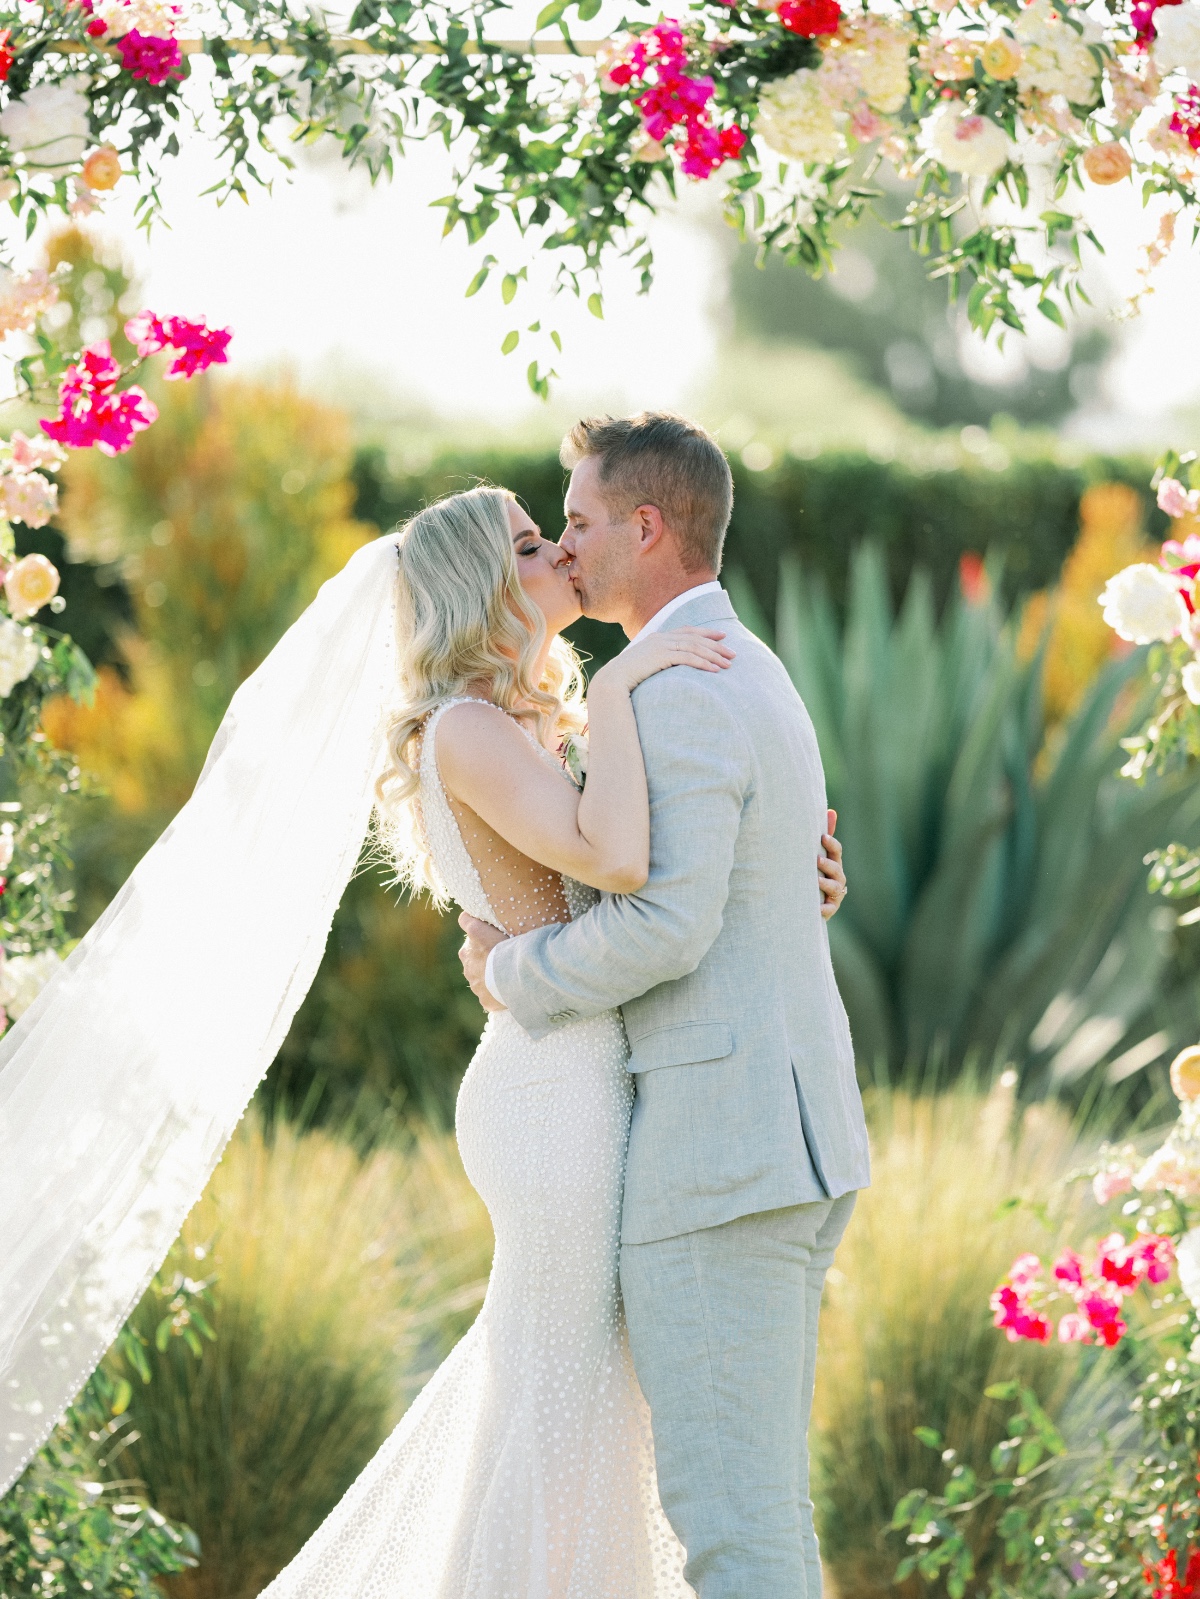 First kiss at modern Arizona desert wedding ceremony